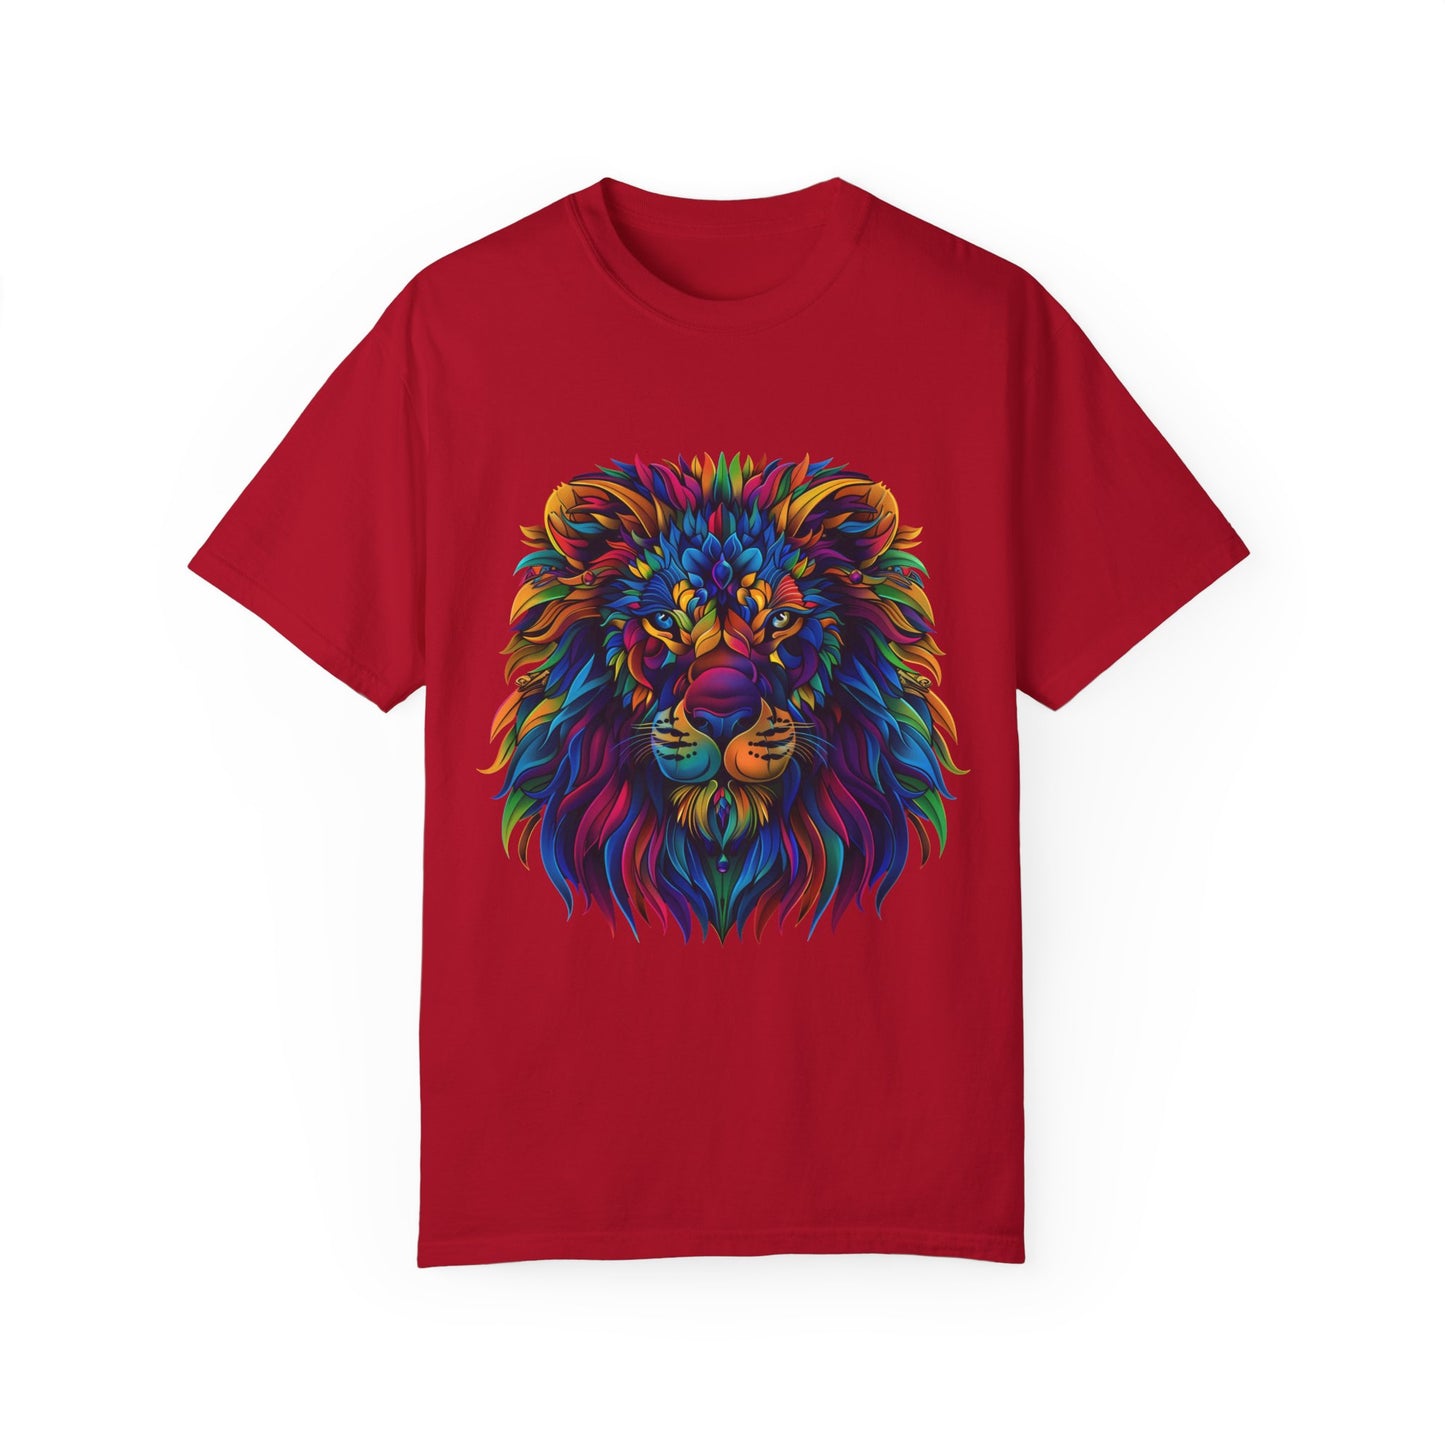 Lion Head Cool Graphic Design Novelty Unisex Garment-dyed T-shirt Cotton Funny Humorous Graphic Soft Premium Unisex Men Women Red T-shirt Birthday Gift-2